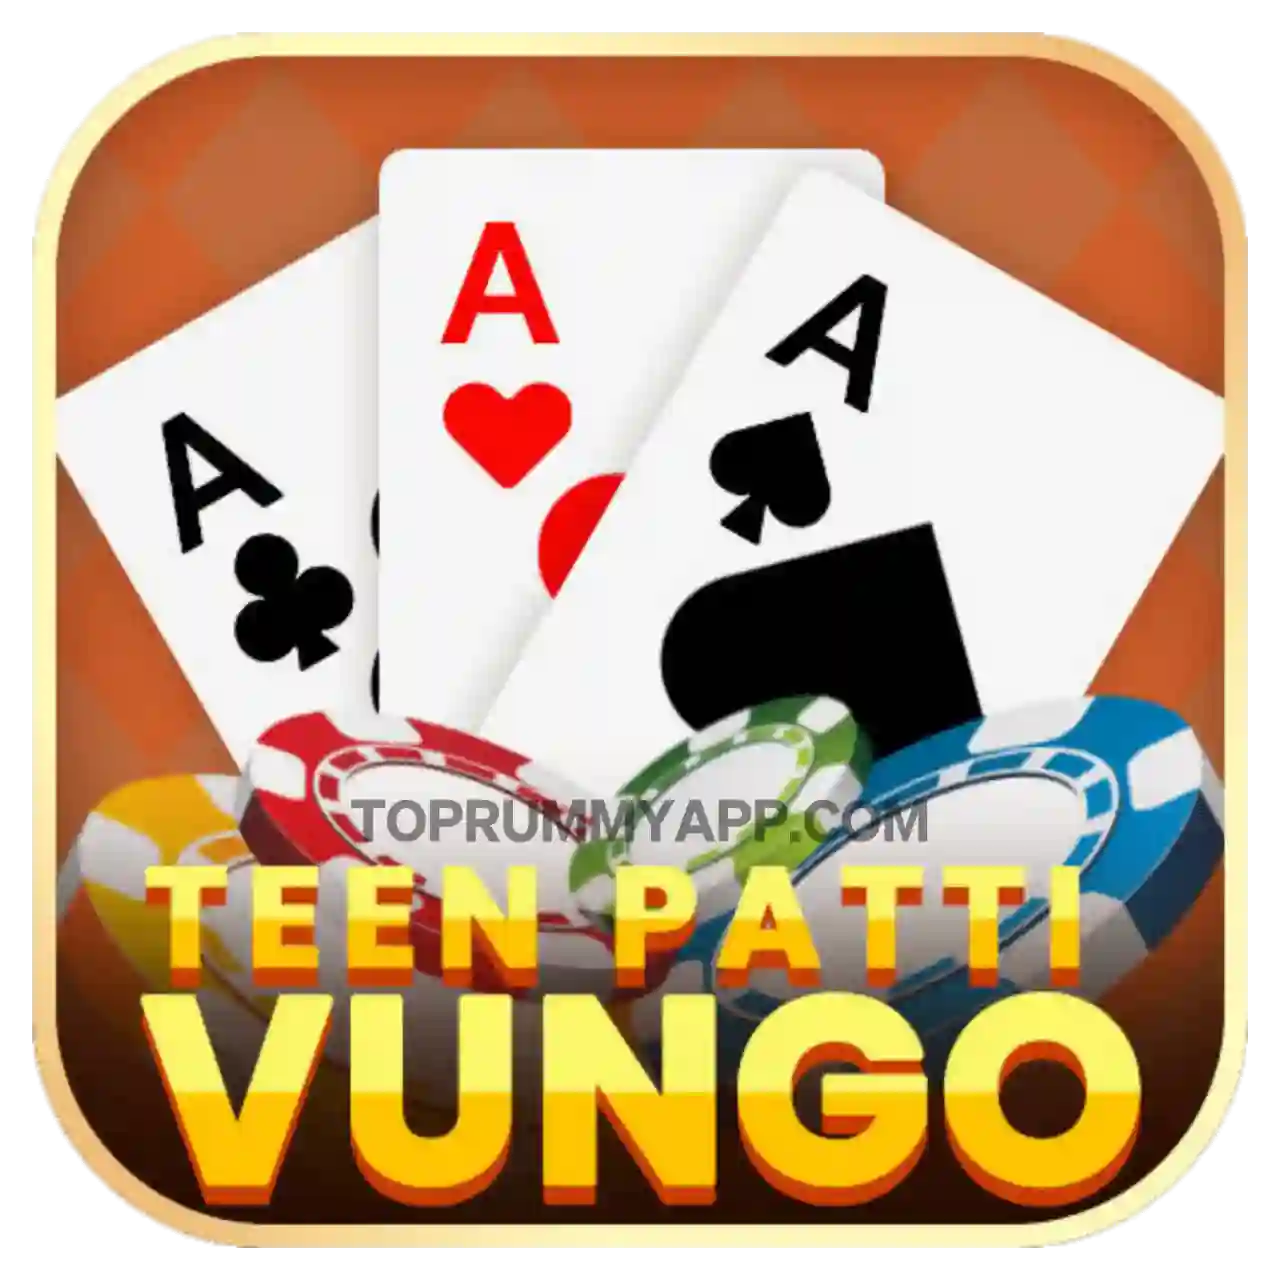 Teen Patti Vungo App Download All Rummy App List ₹41 Bonus